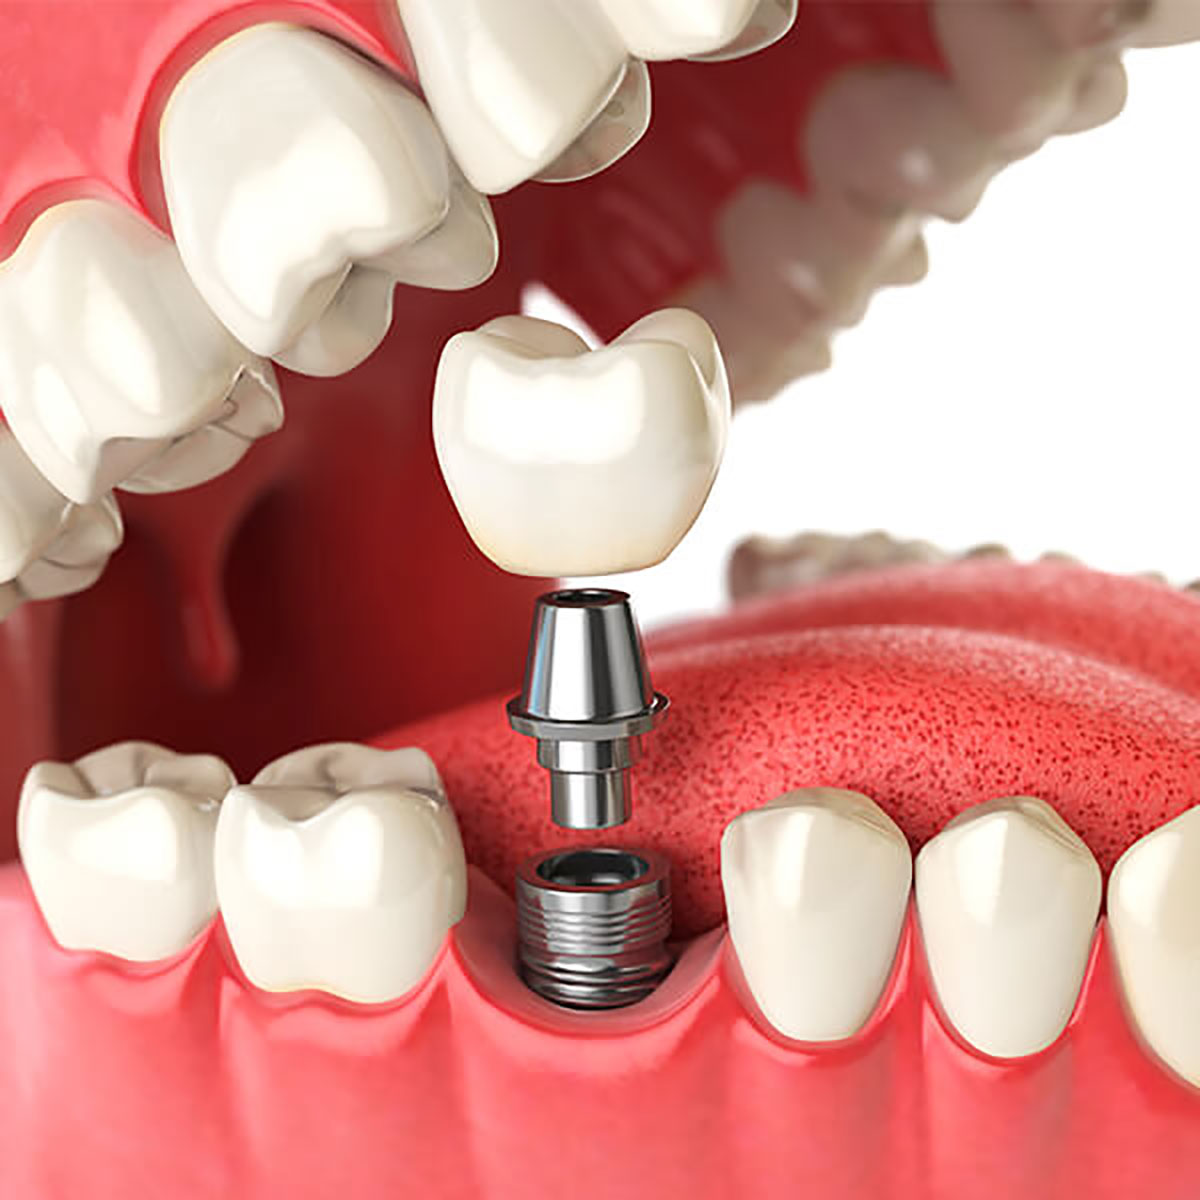 Root Canal Dentist - Dental cosmetics, Dental, Dental implant procedure